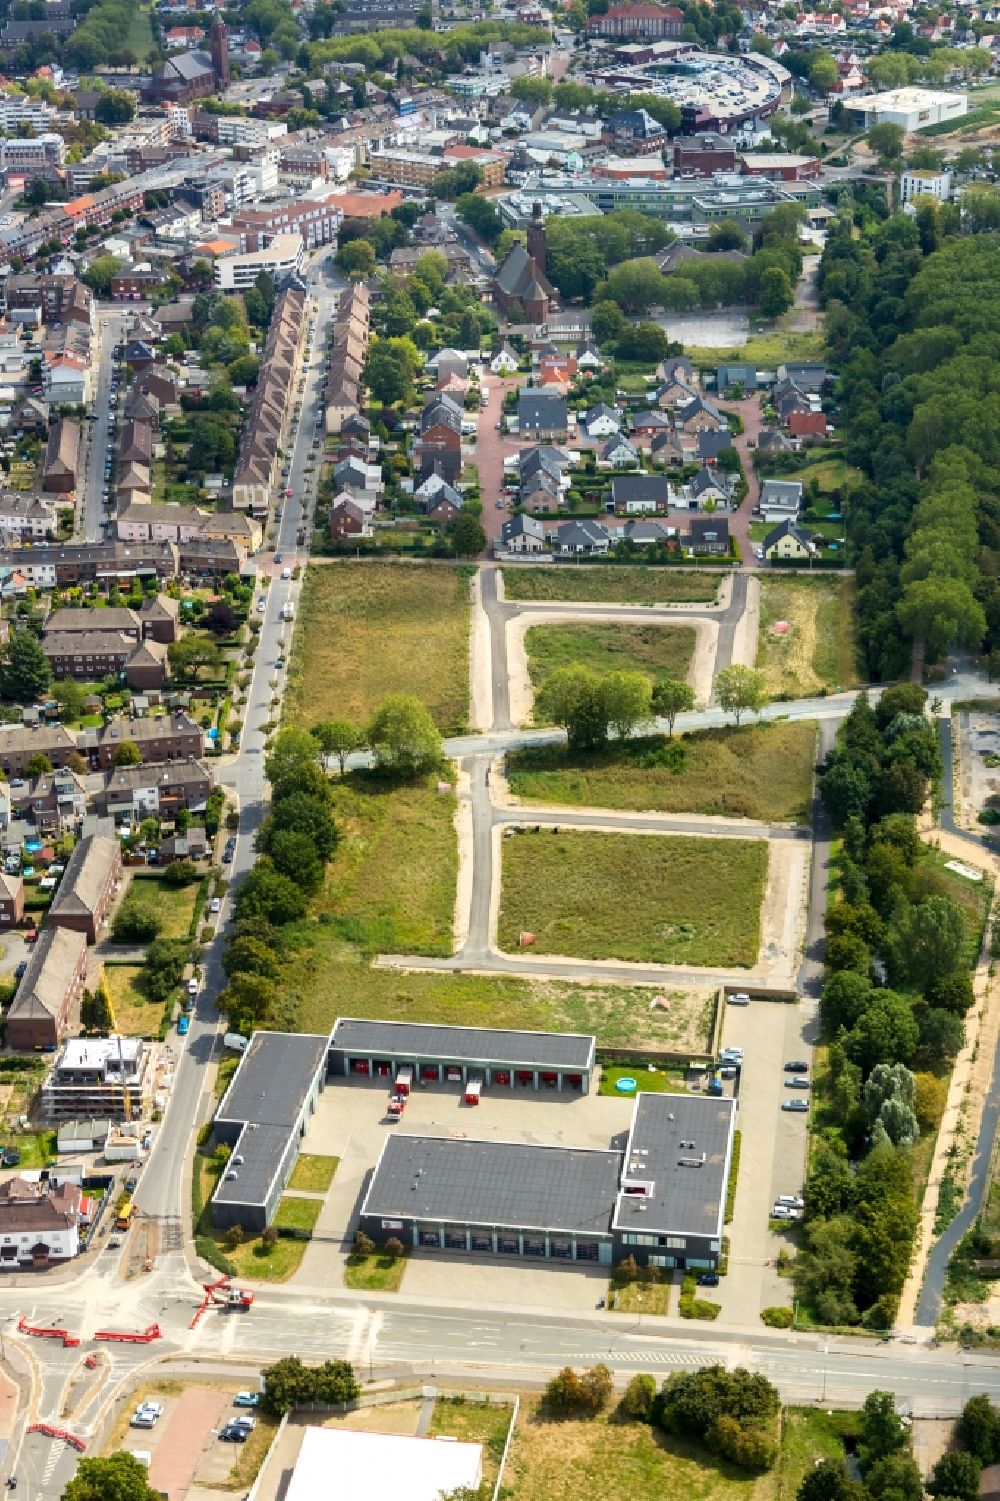 Aerial image Kamp-Lintfort - Grounds of the fire depot on Eyller Strasse in the district Niersenbruch in Kamp-Lintfort in the state North Rhine-Westphalia, Germany